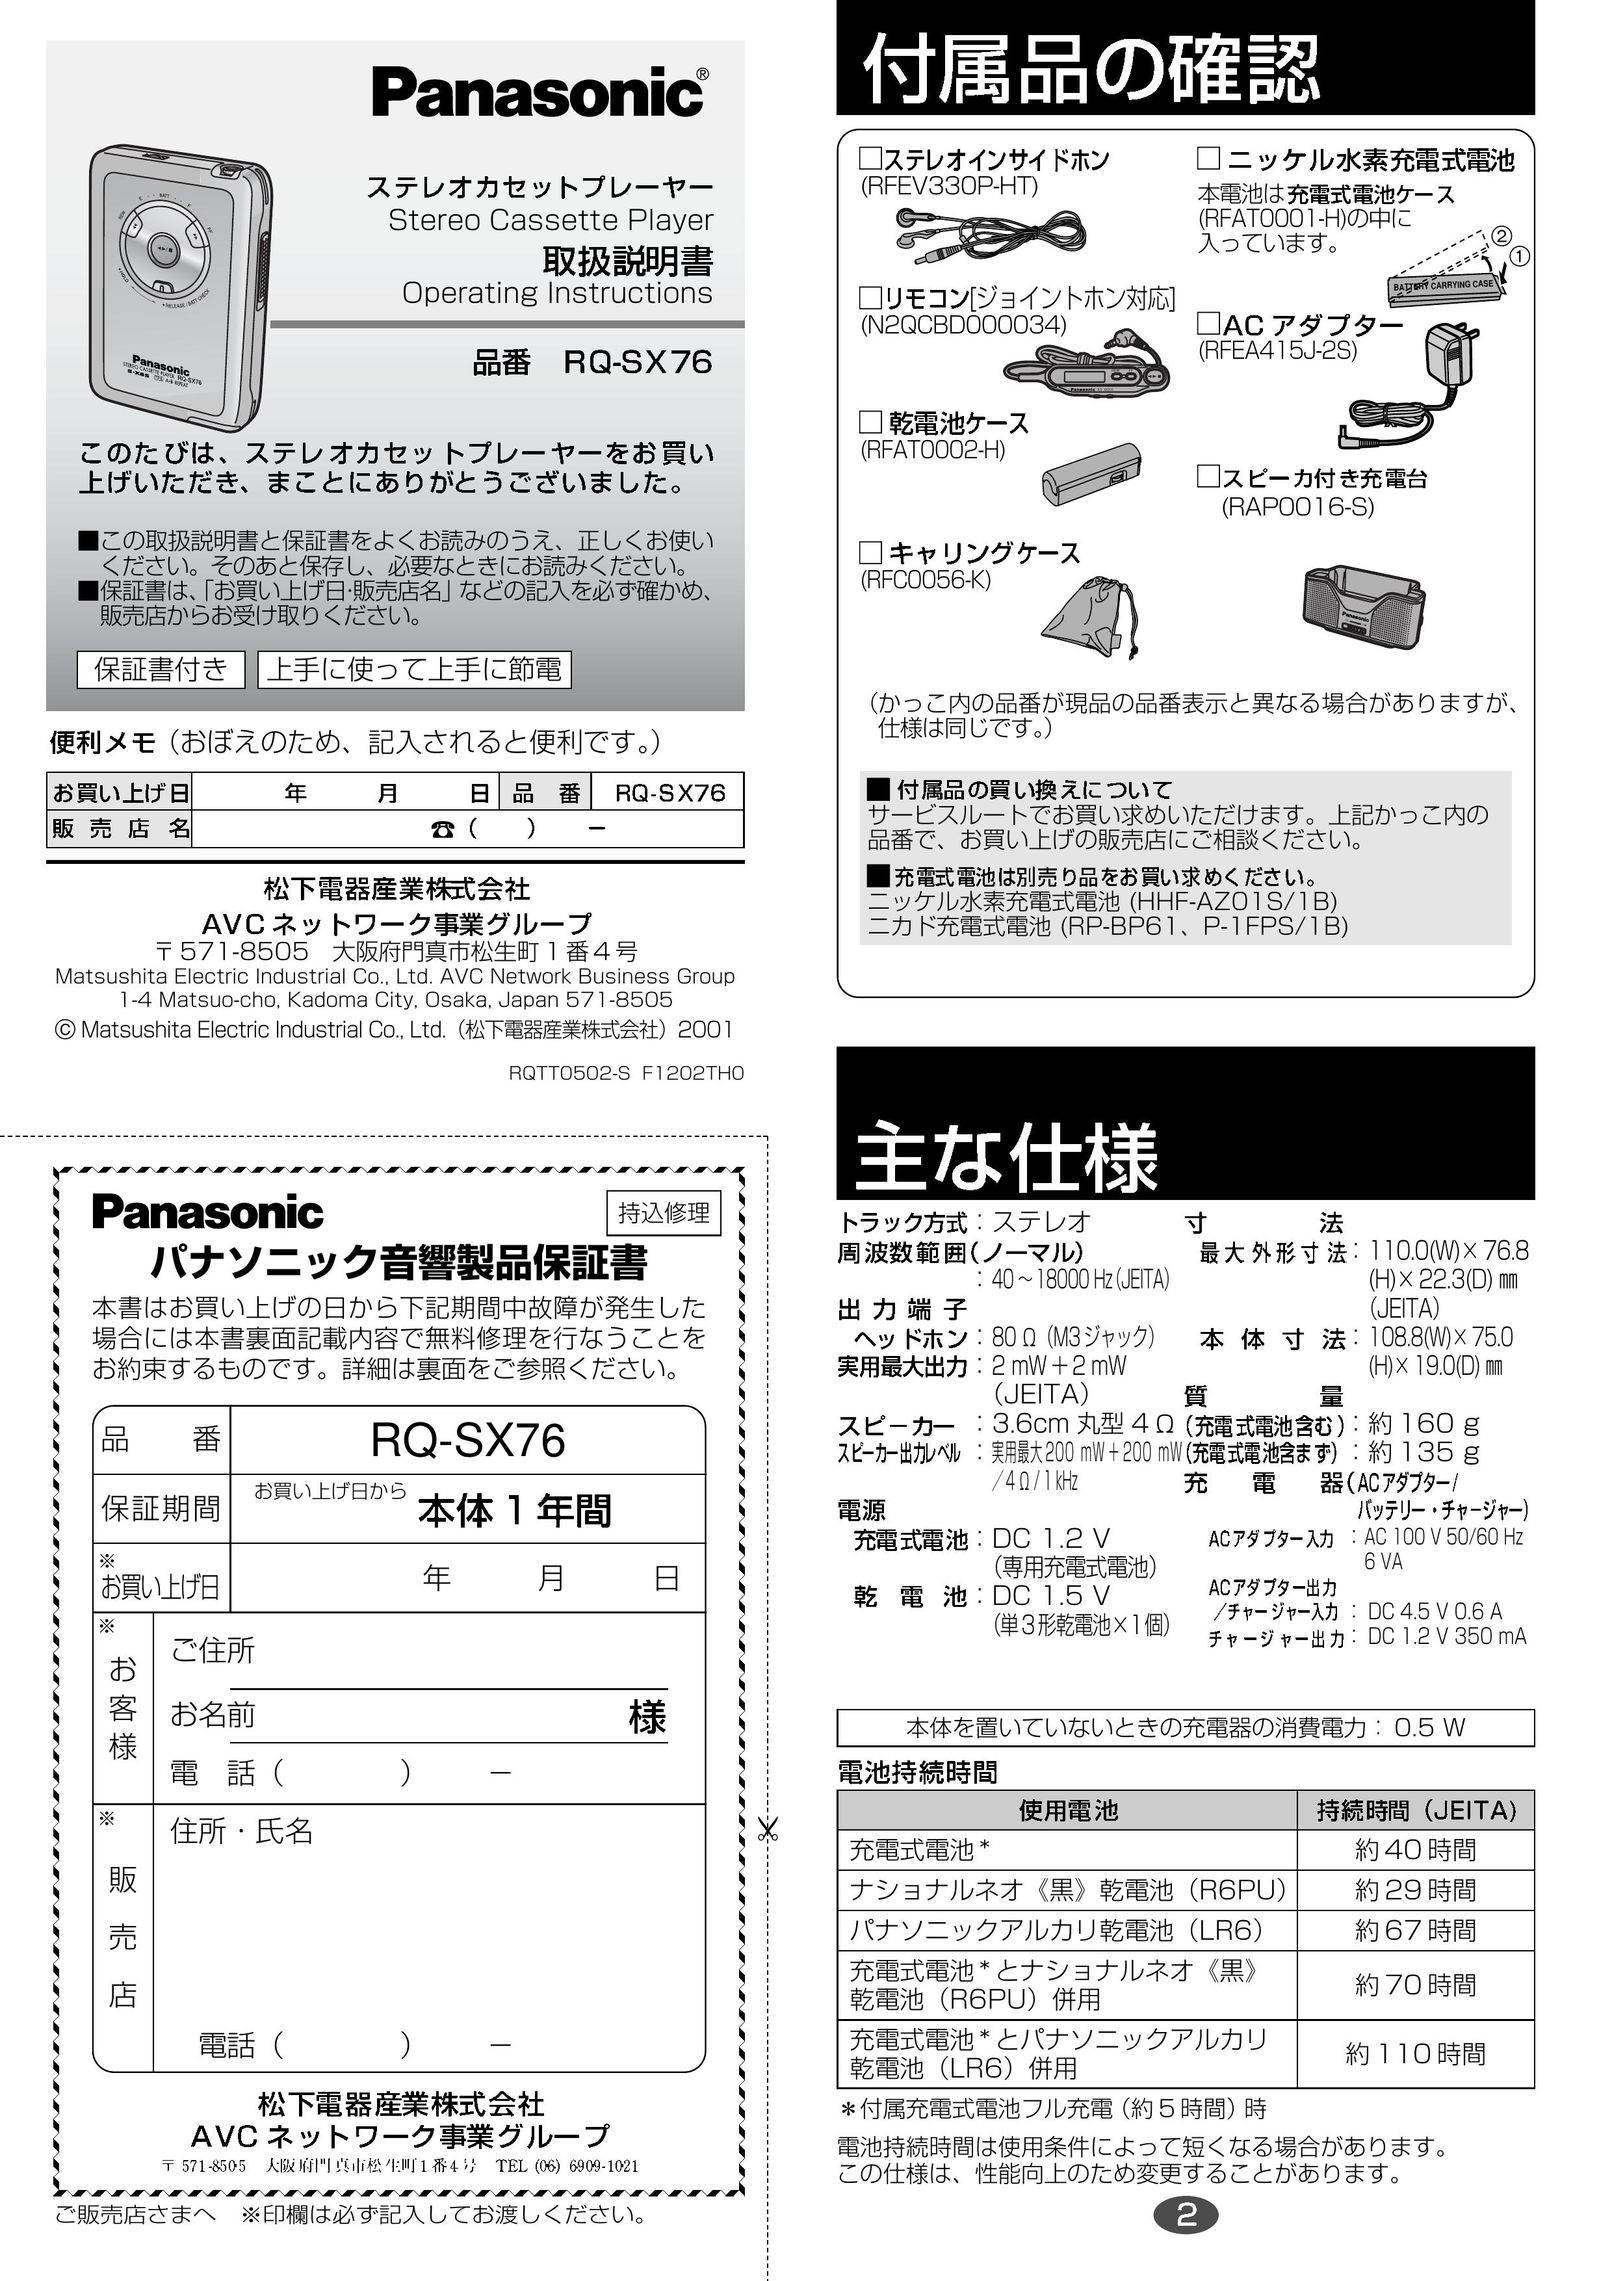 Panasonic RQ-SX76 Cassette Player User Manual